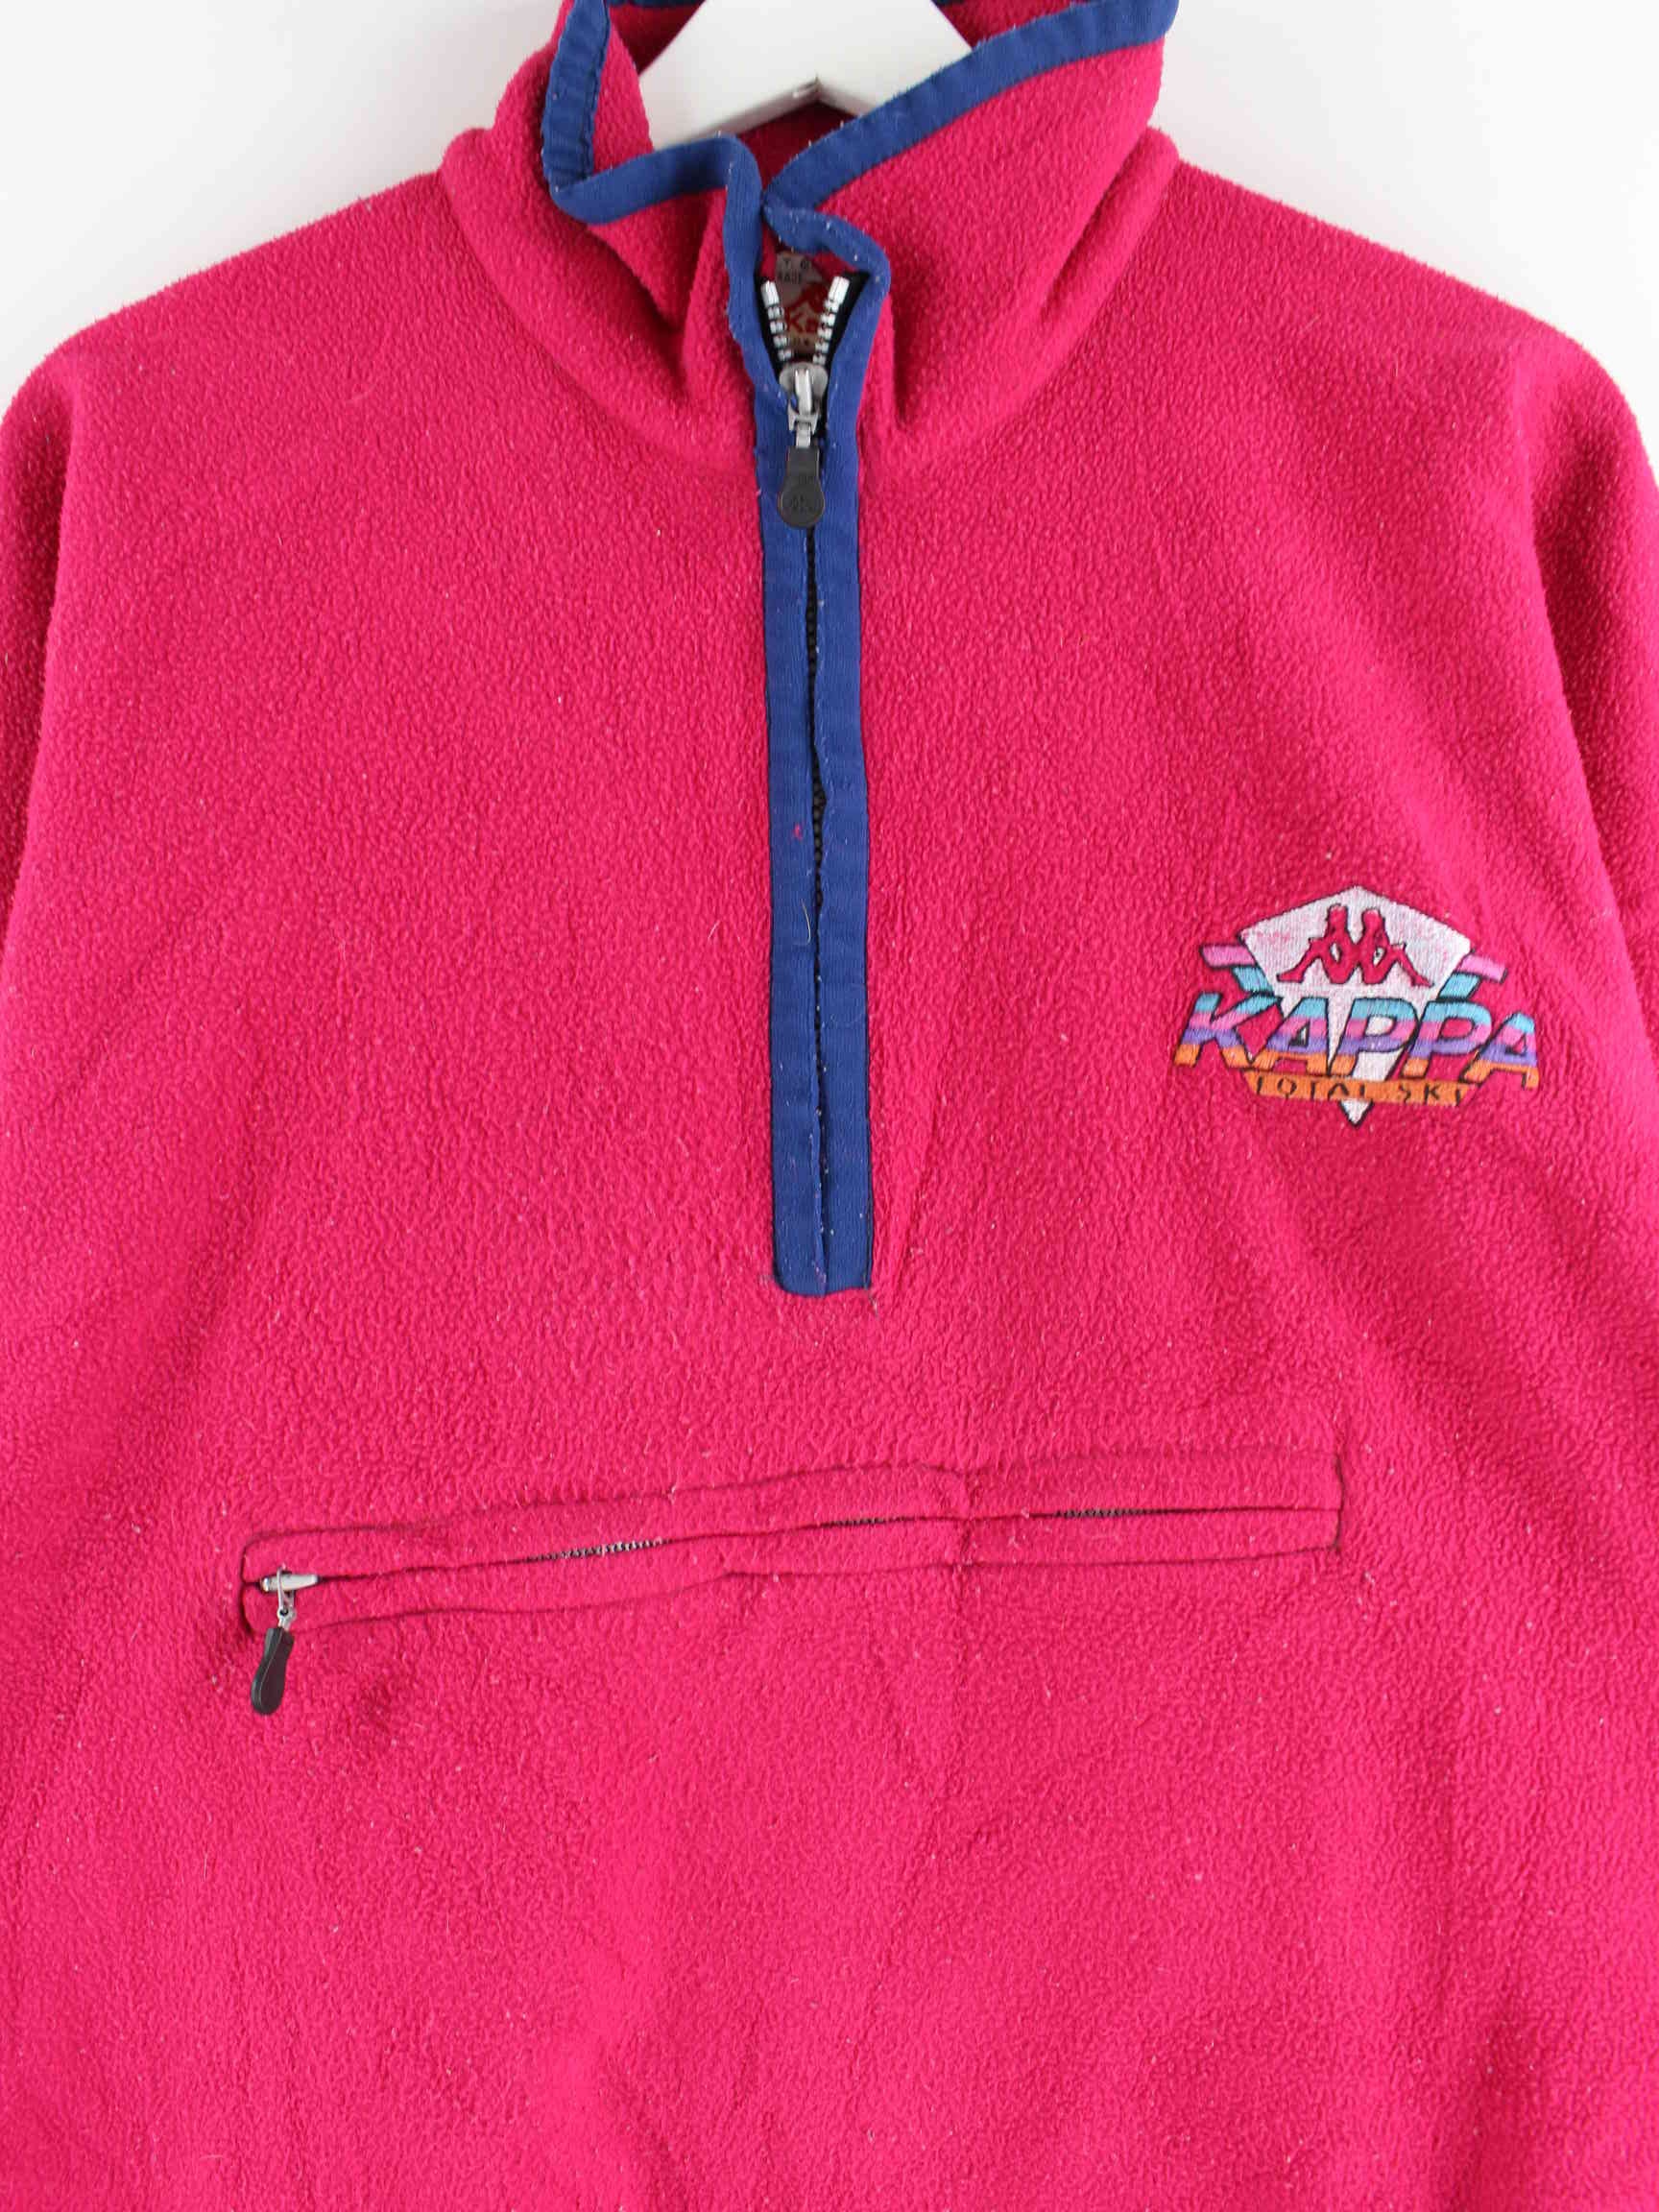 Kappa 80s Vintage Half Zip Fleece Sweater Pink M (detail image 1)